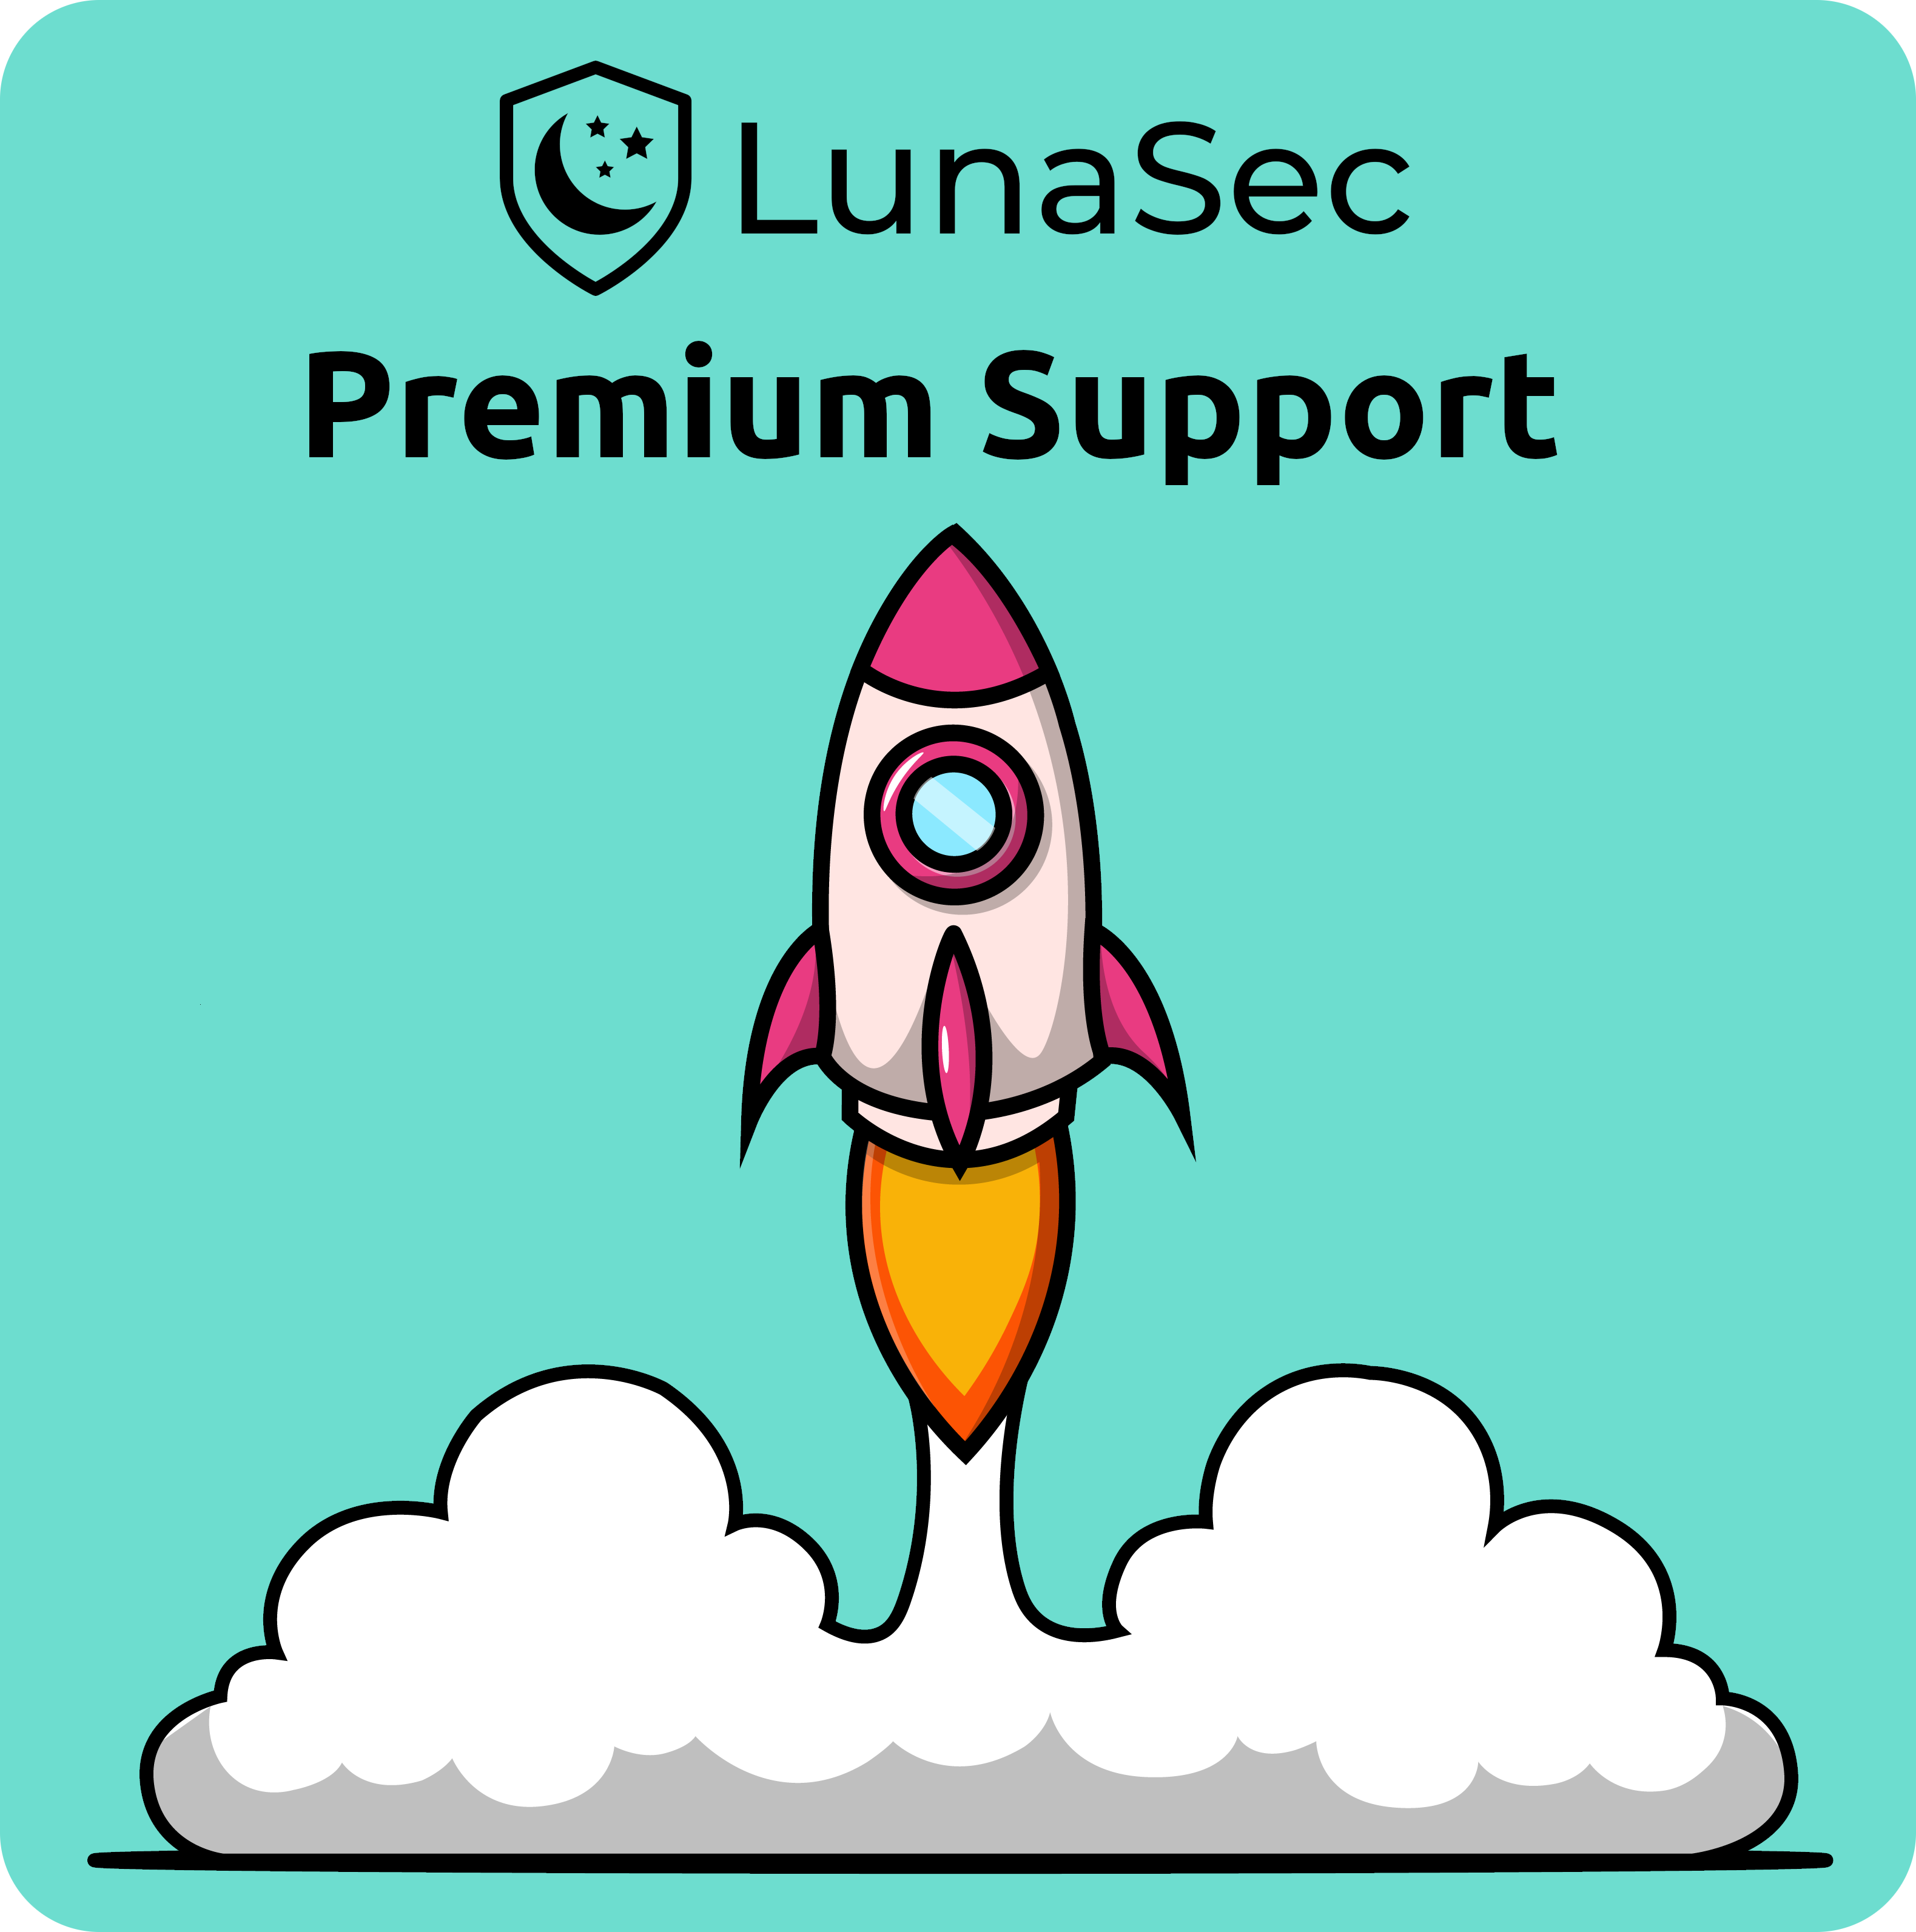 LunaSec Premium Support Link